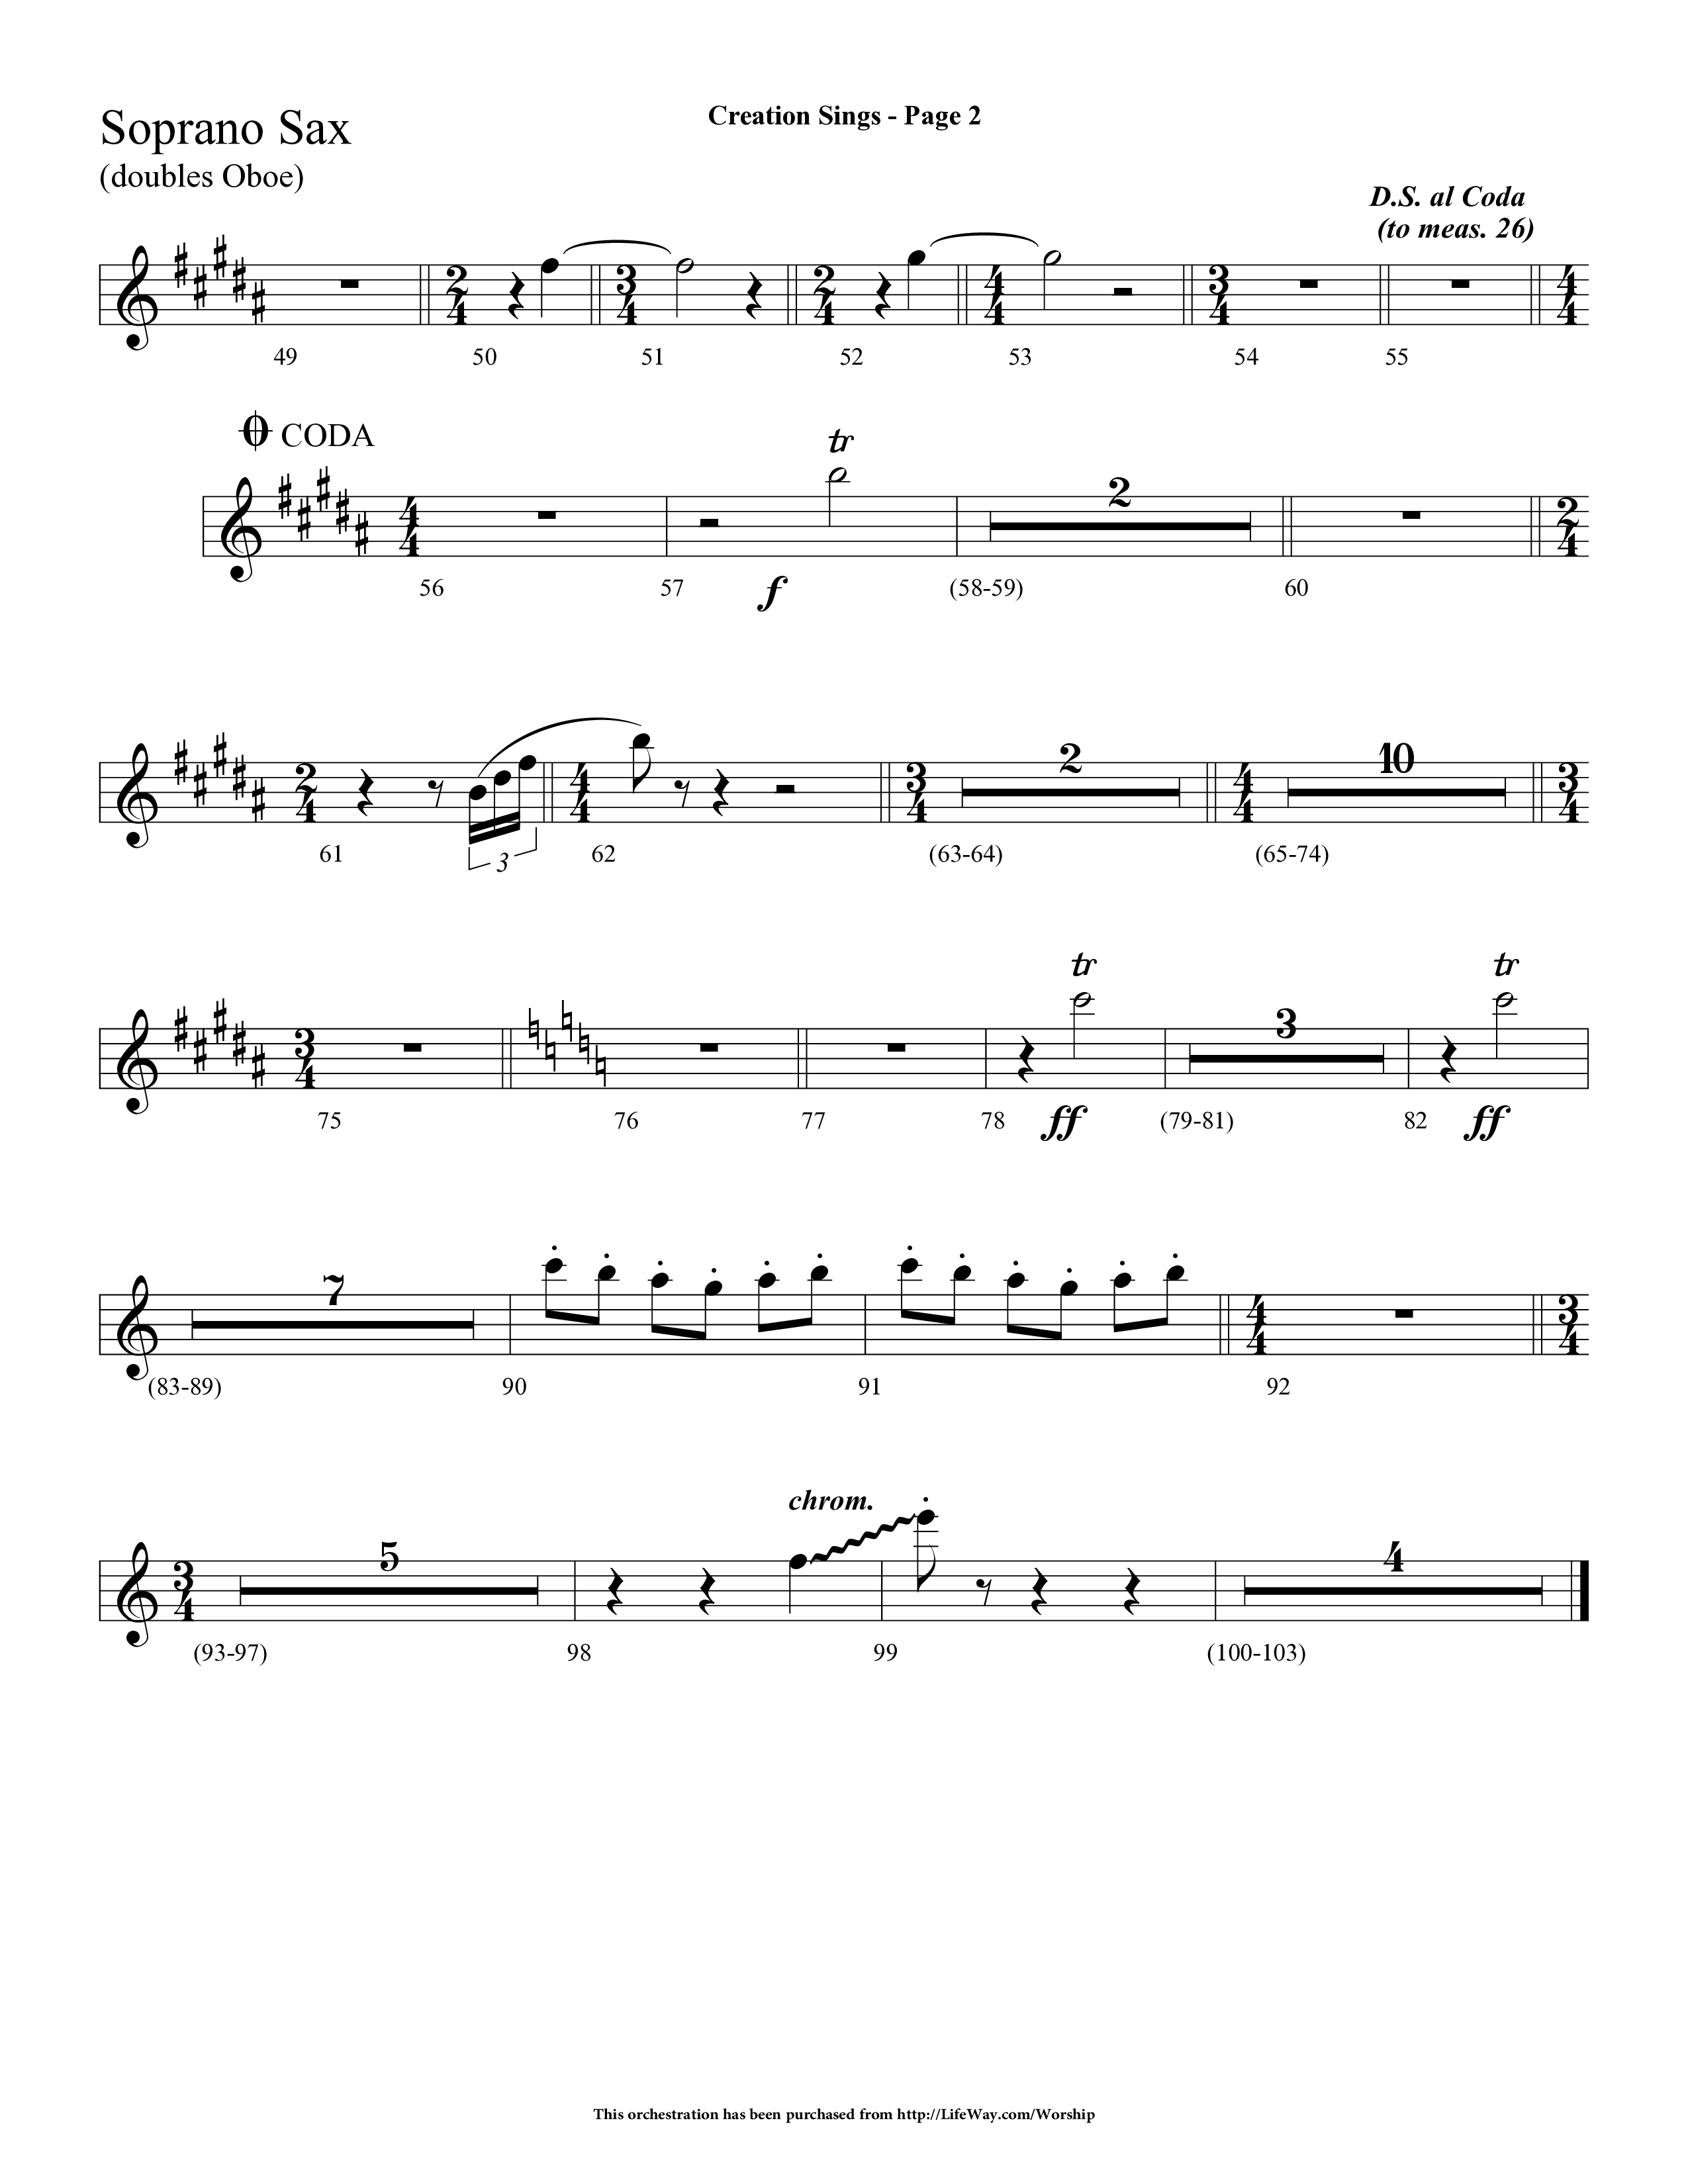 Creation Sings (Choral Anthem SATB) Soprano Sax (Lifeway Choral / Arr. Dave Williamson)